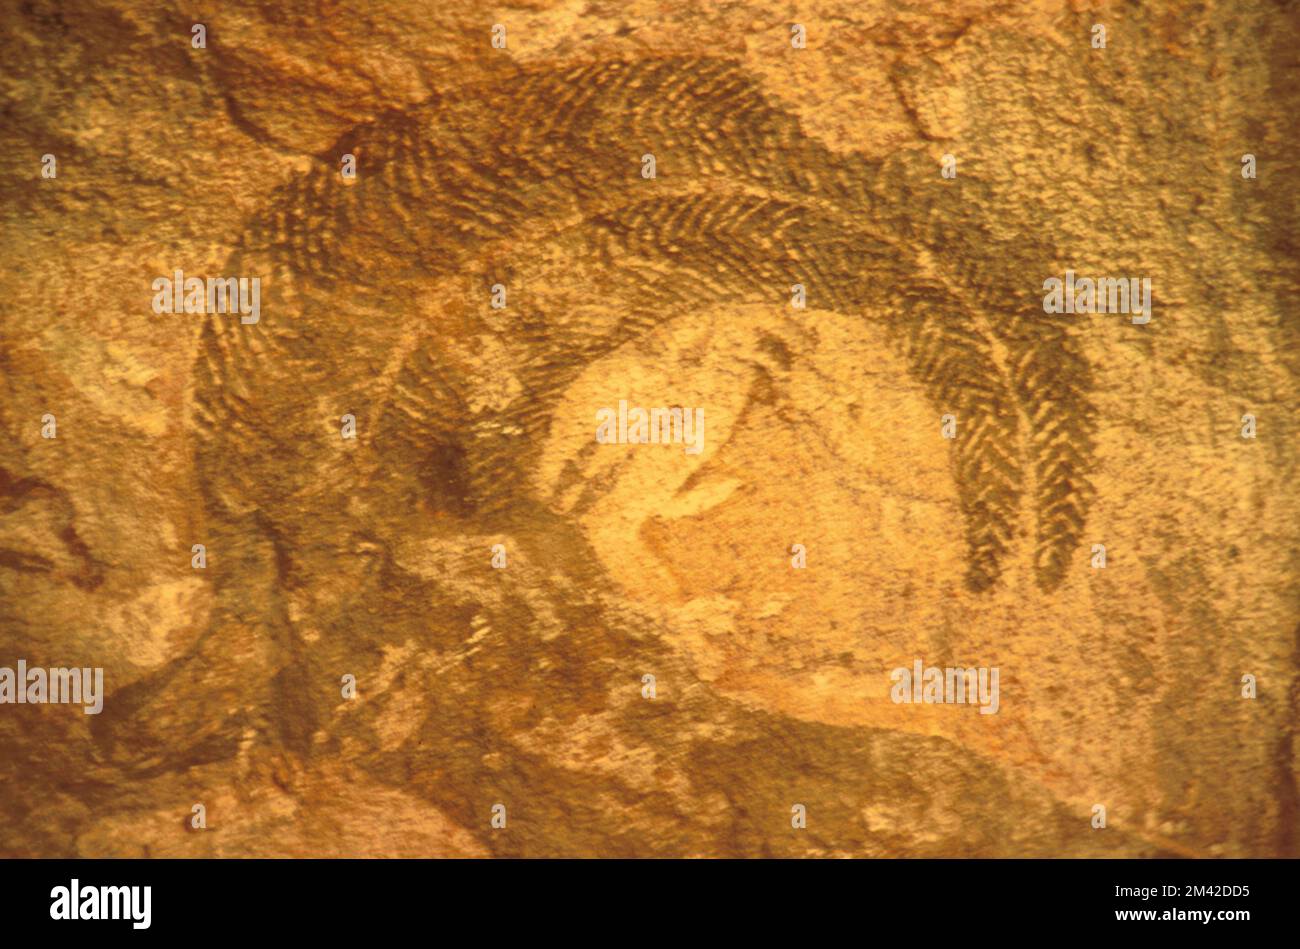 Neolithic rock paintings of the Tassili N'Ajjer, South Algeria, Sahara desert, showing detail of herringbone pattern on a moufflon, an extinct wild sheep. Stock Photo